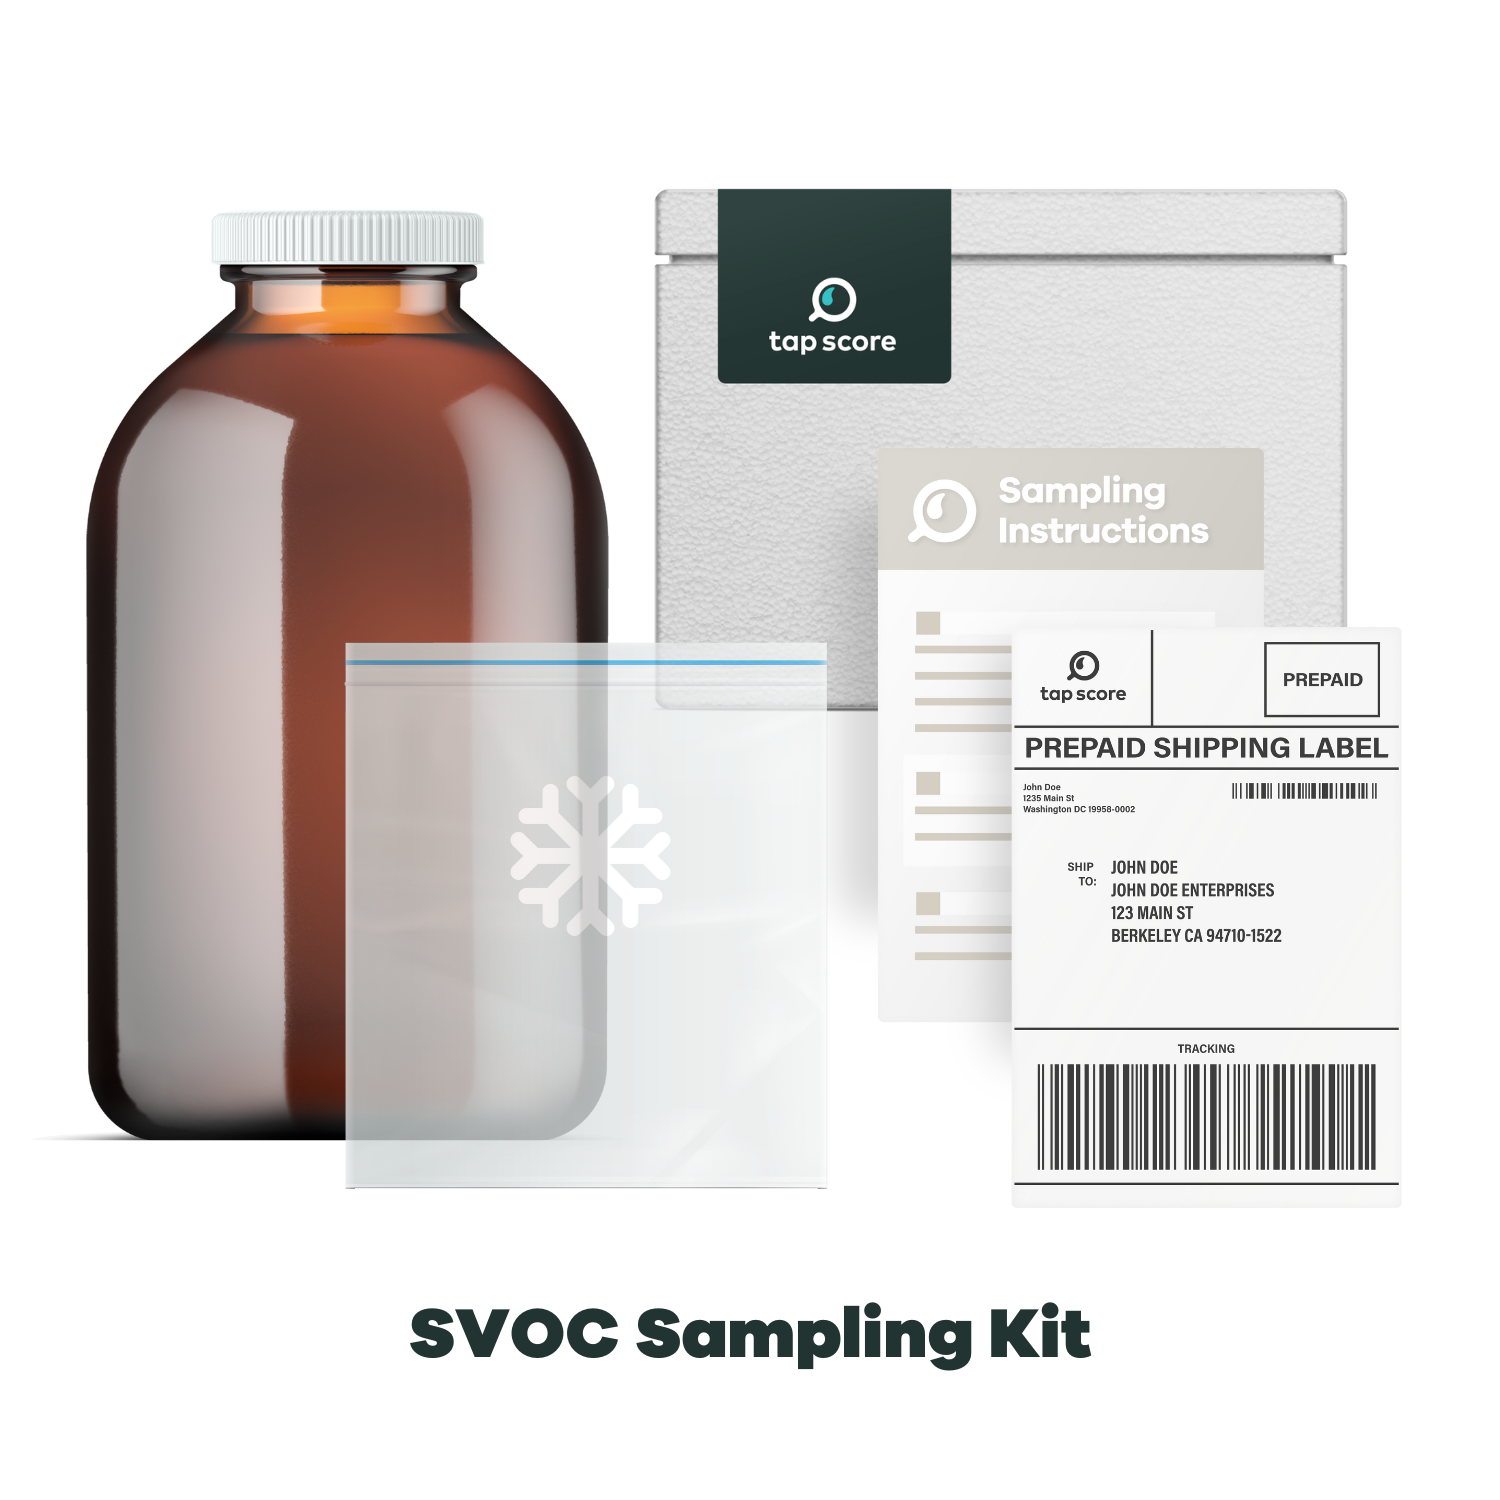 SVOC in Drinking Water Sampling Kit